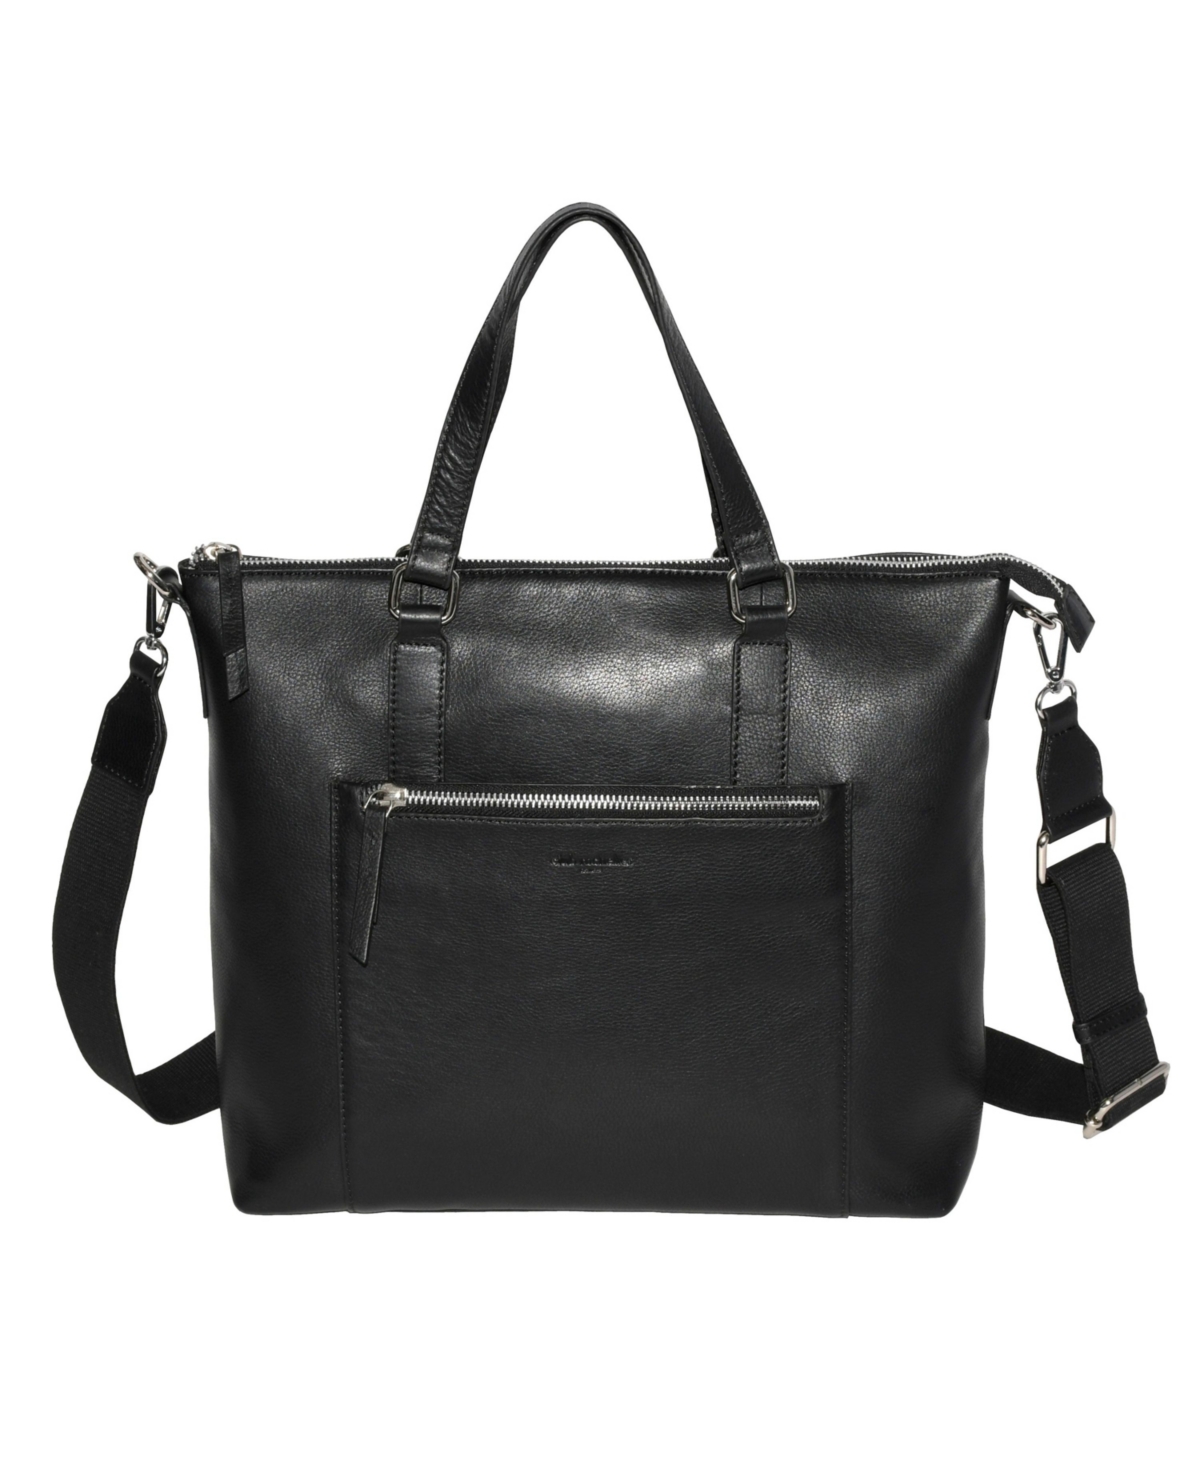 Ladies Large Leather Crossbody Business Tote Bag - Black